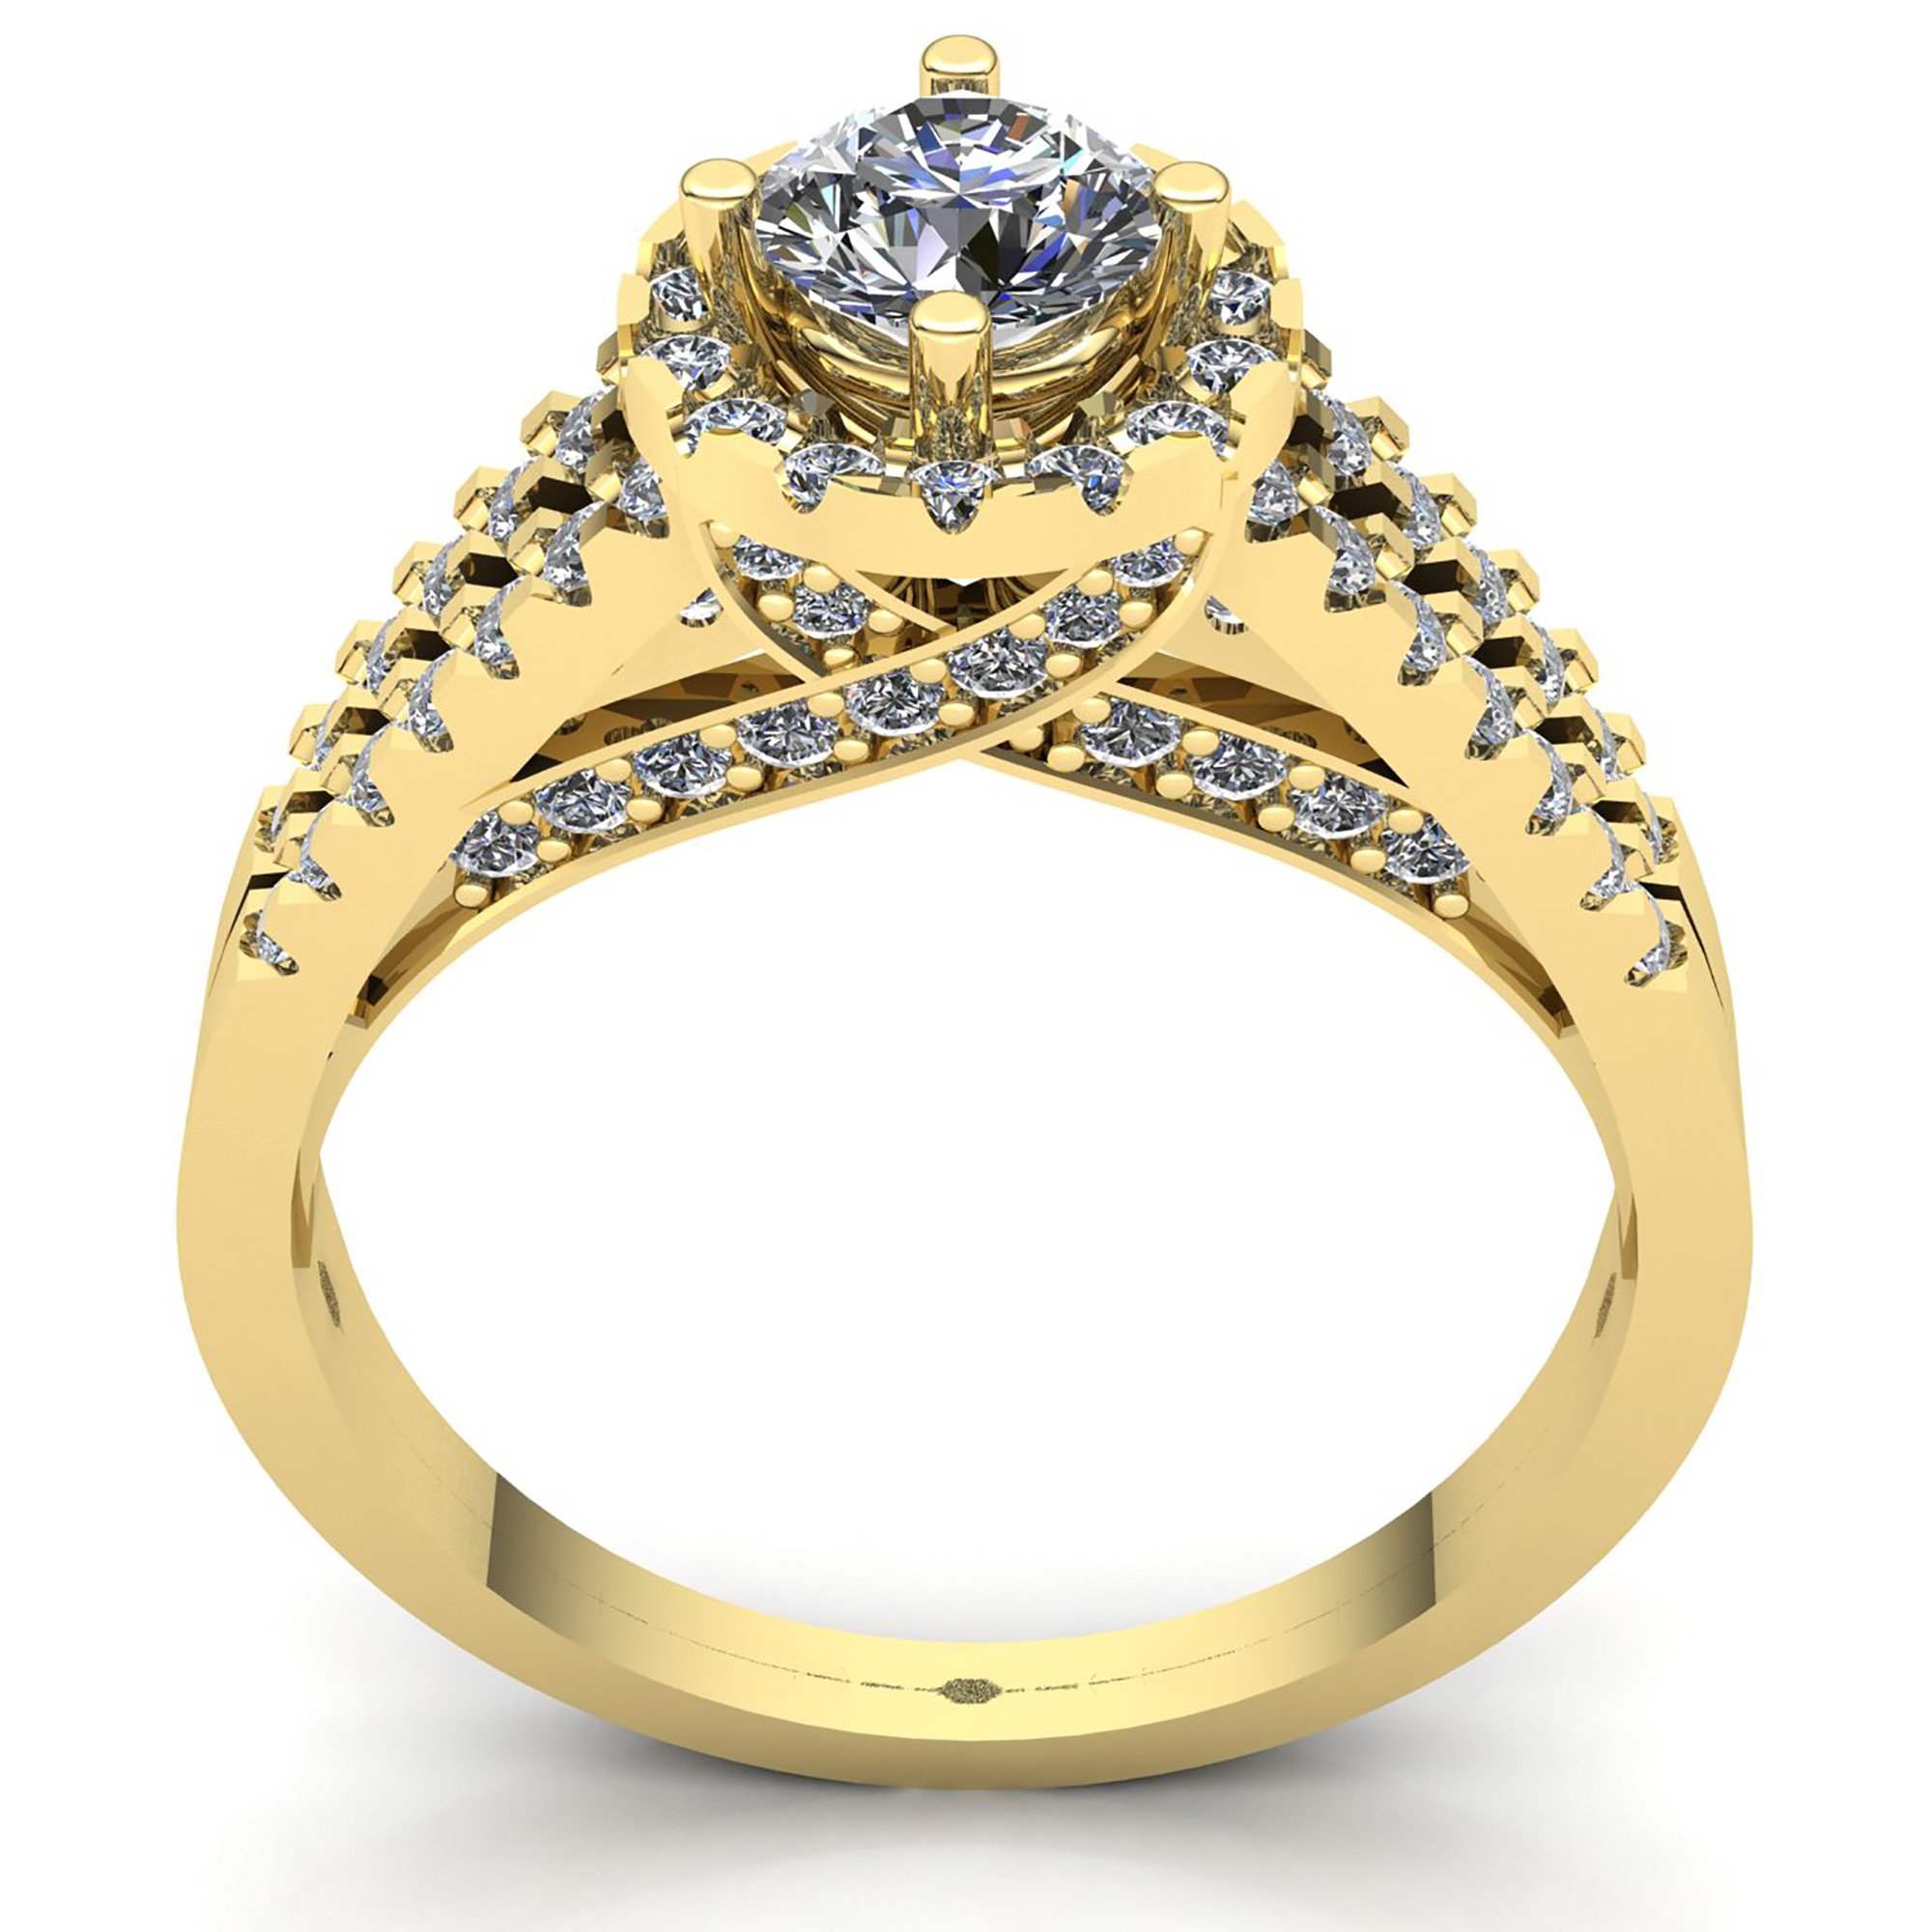 0.5carat Round Cut Diamond Ladies Solitaire Halo Engagement Ring 10K Gold 